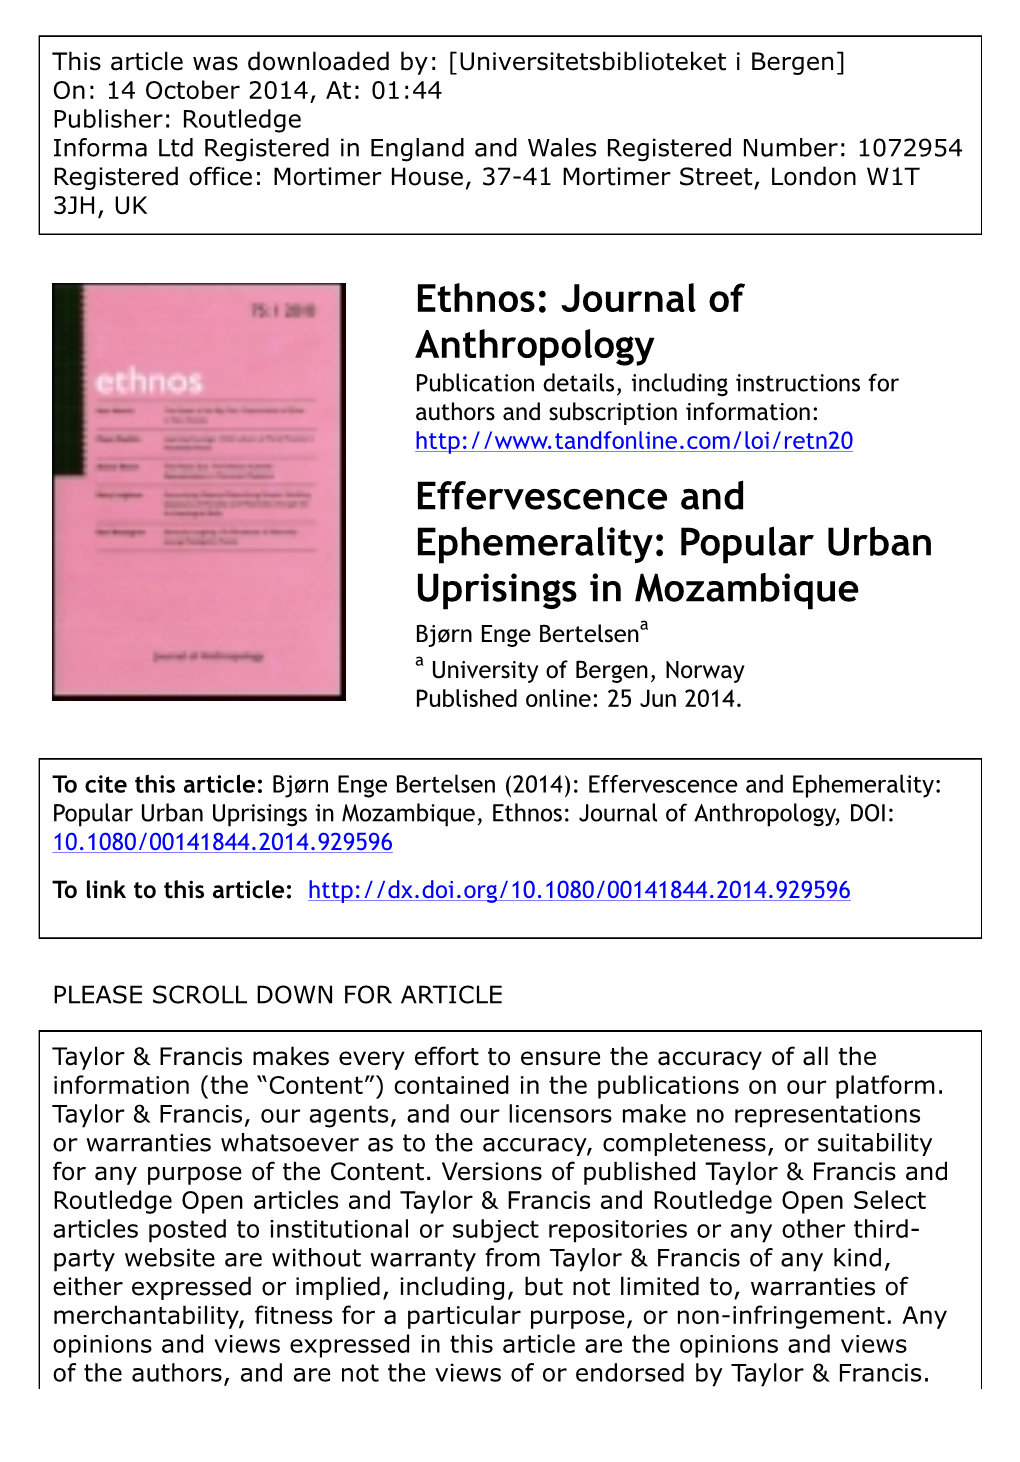 Effervescence and Ephemerality: Popular Urban Uprisings in Mozambique Bjørn Enge Bertelsena a University of Bergen, Norway Published Online: 25 Jun 2014